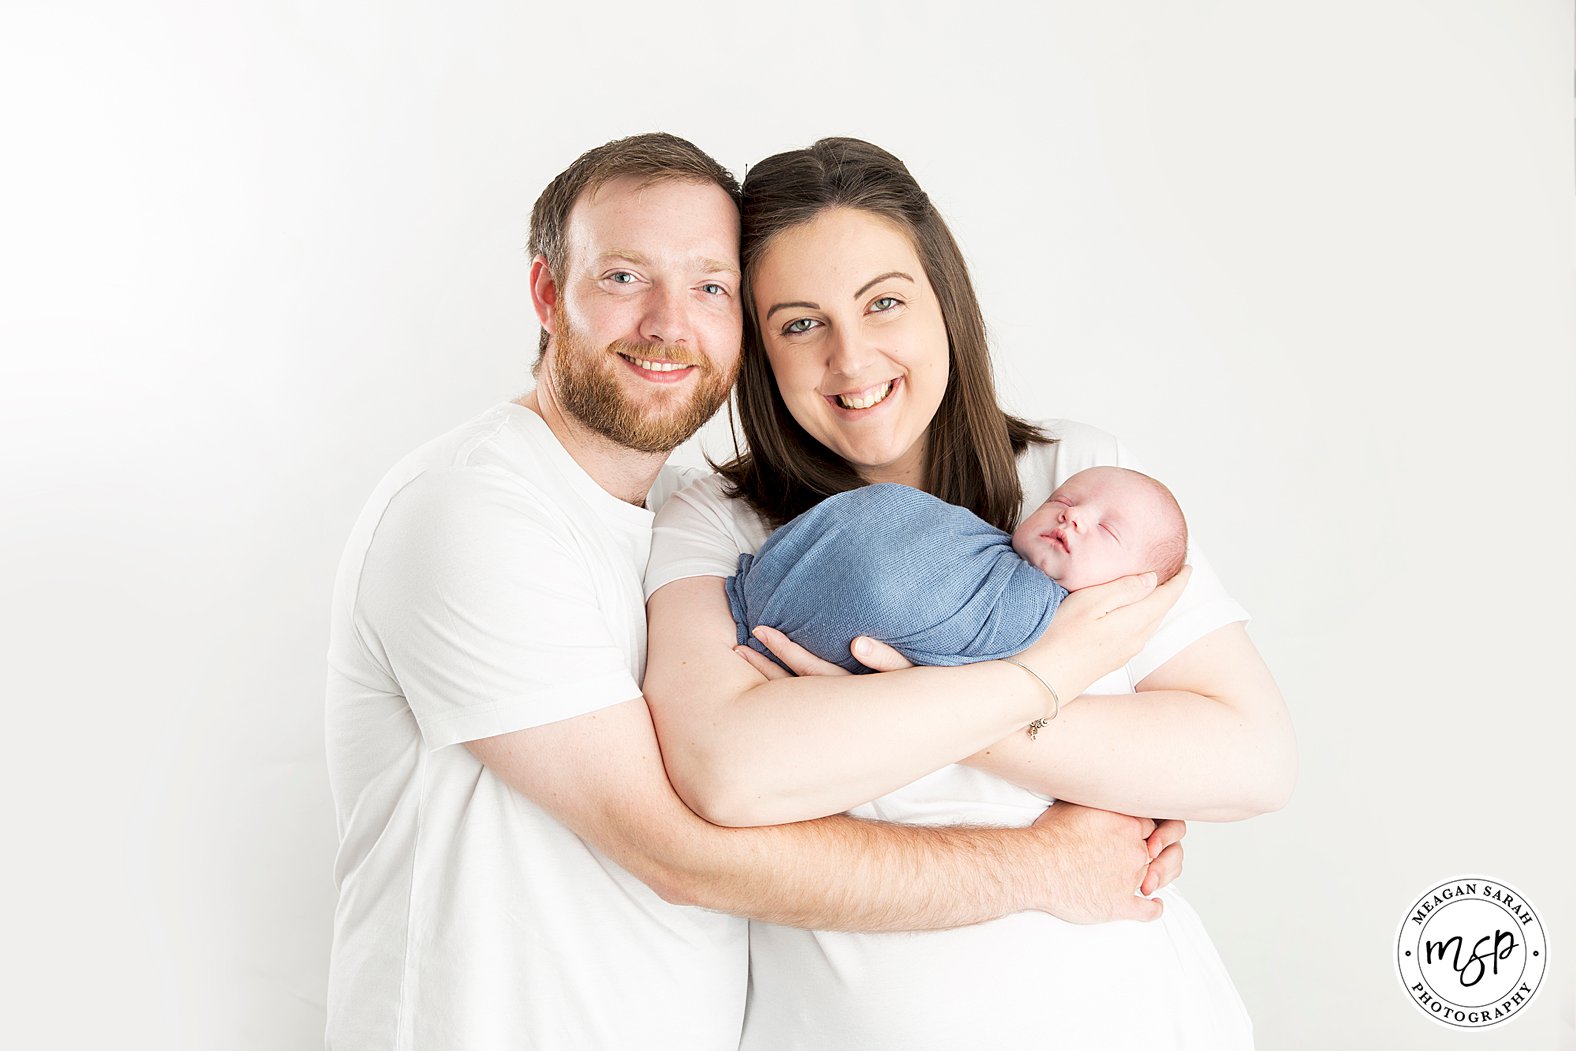 Newborn baby photos,Photos of newborn baby,Newborn Photography,Baby photography,Leeds Photographer,Leeds Newborn Photographer,Studio,Family,Professional photography,